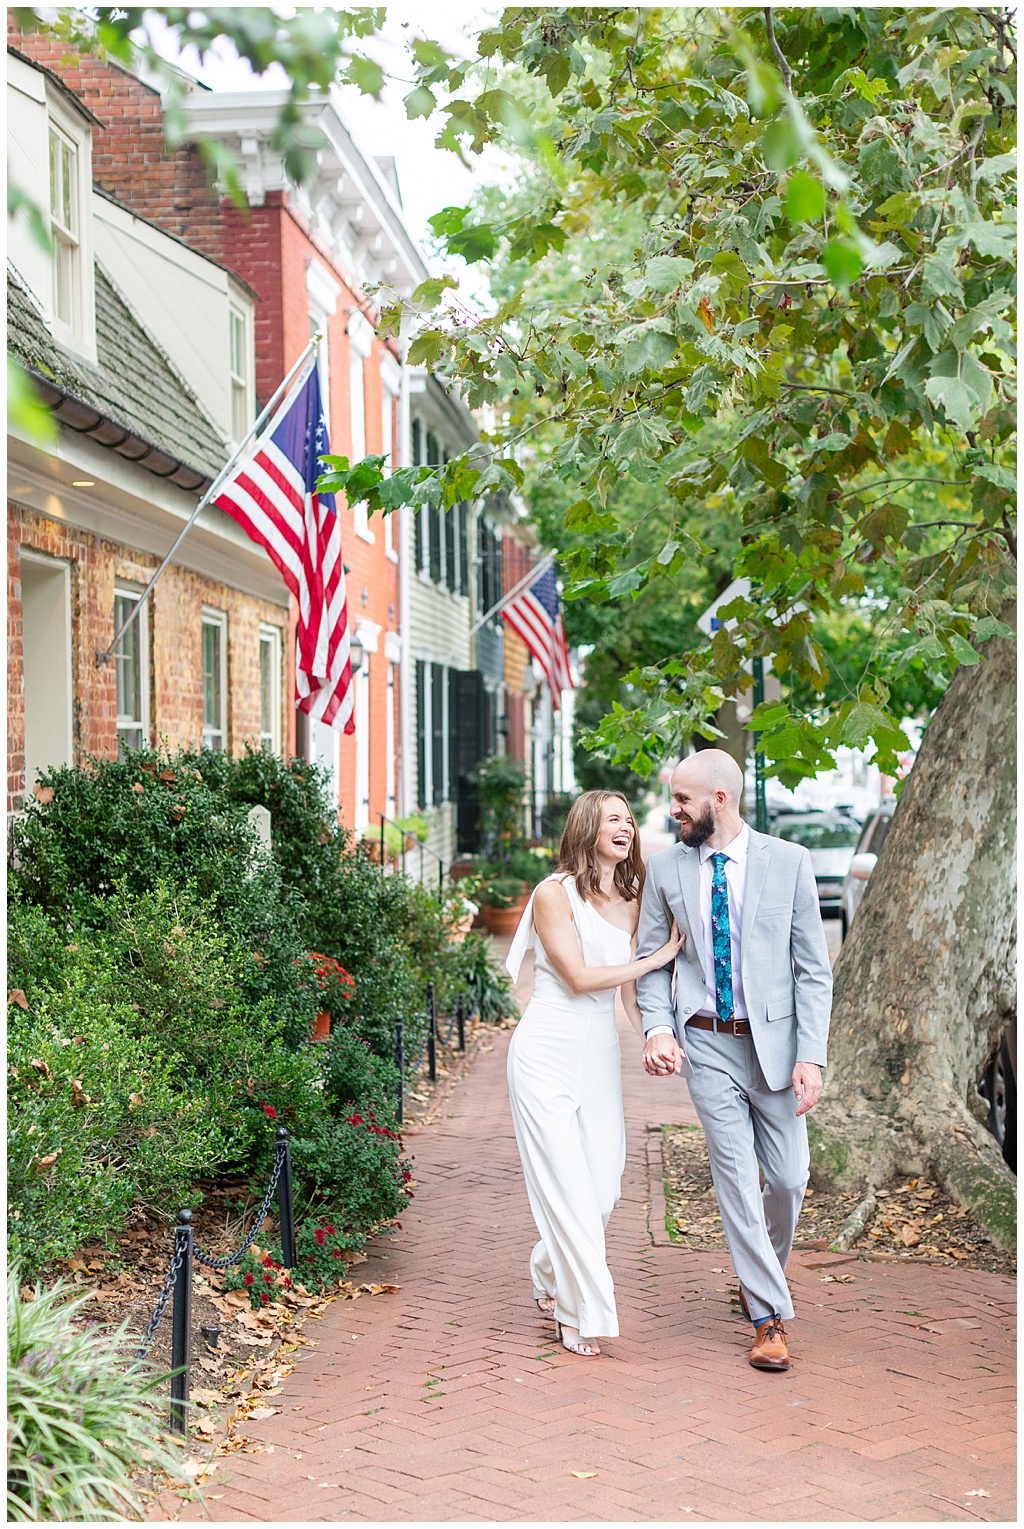 Annapolis wedding